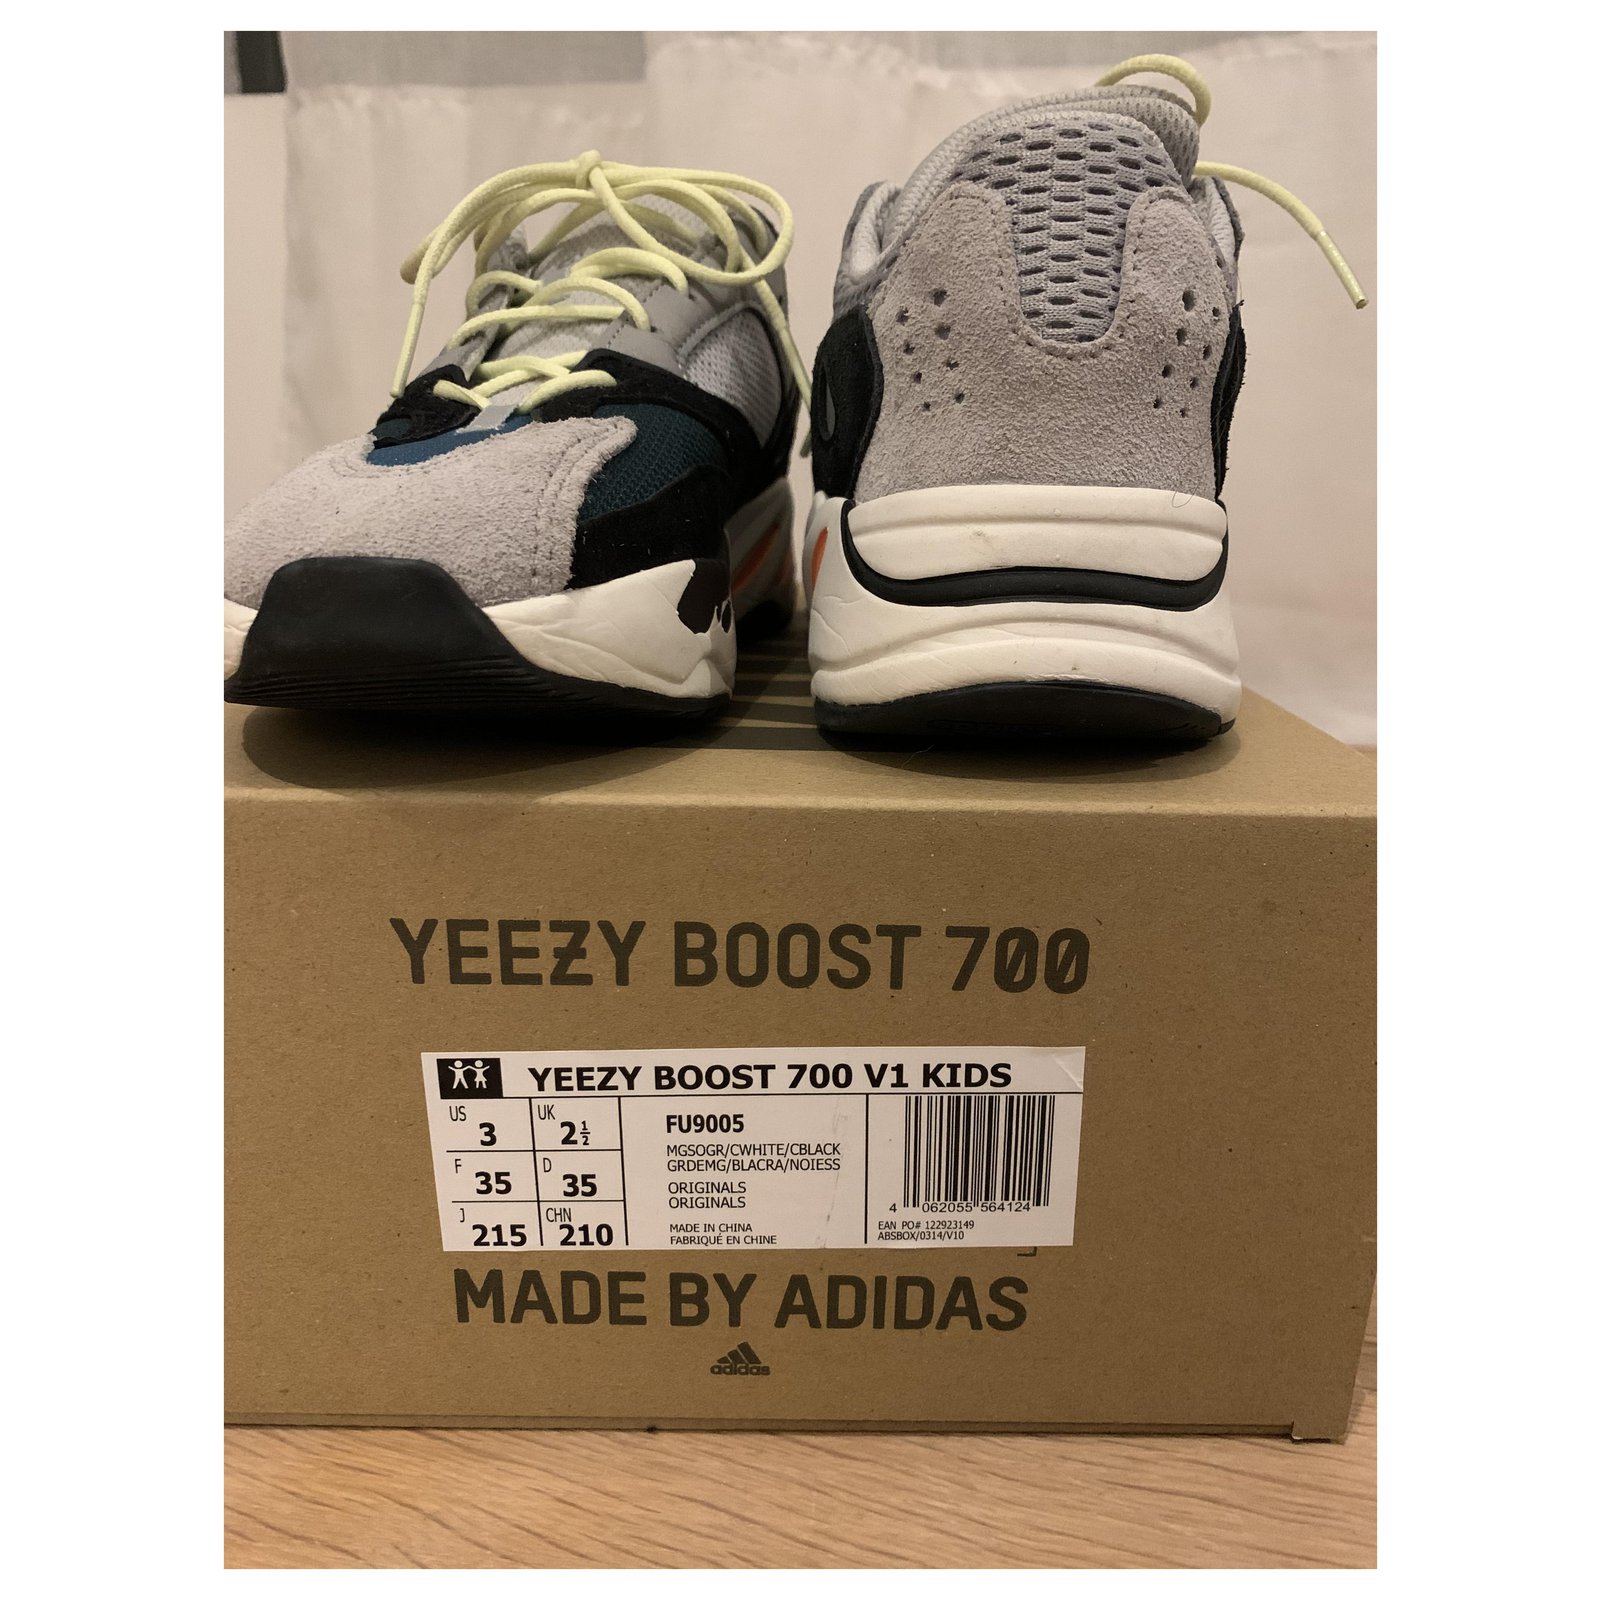 Adidas Yeezy boost wave runner 700 